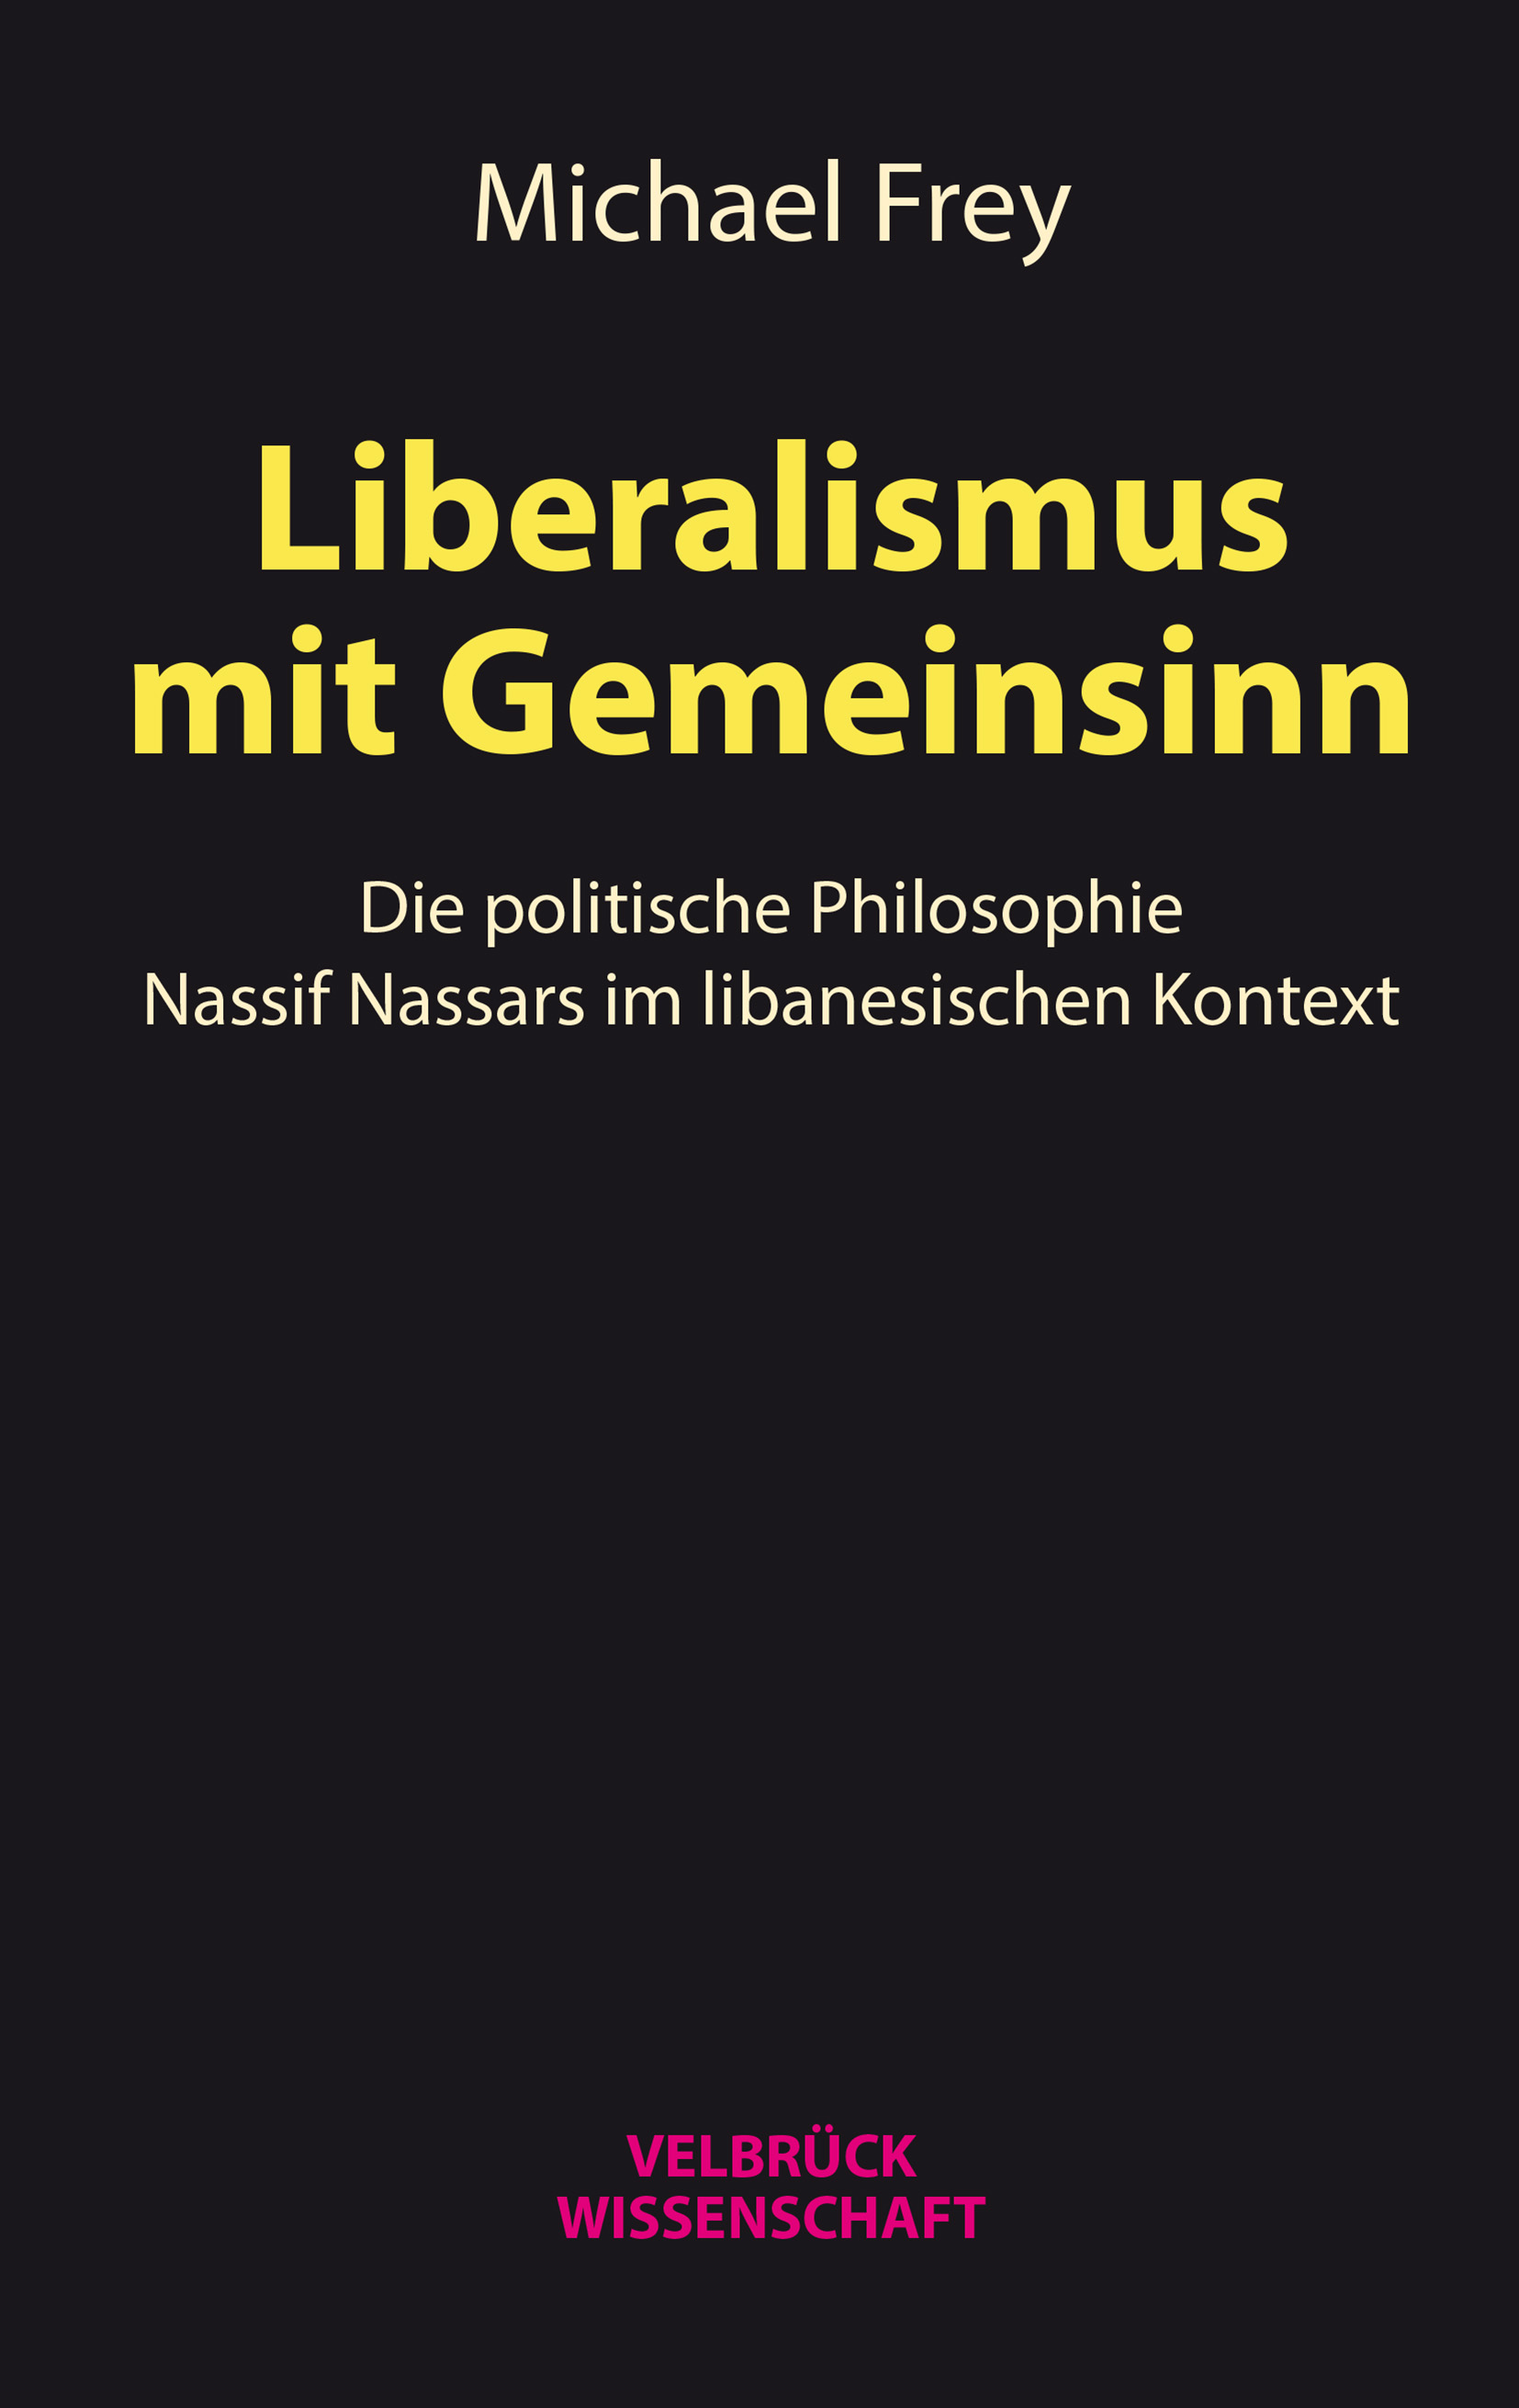 Cover of Michael Frey's "Liberalismus mit Gemeinsinn: Die politische Philosophie Nassif Nassars im libanesischen Kontext" (published in German by Velbrueck)